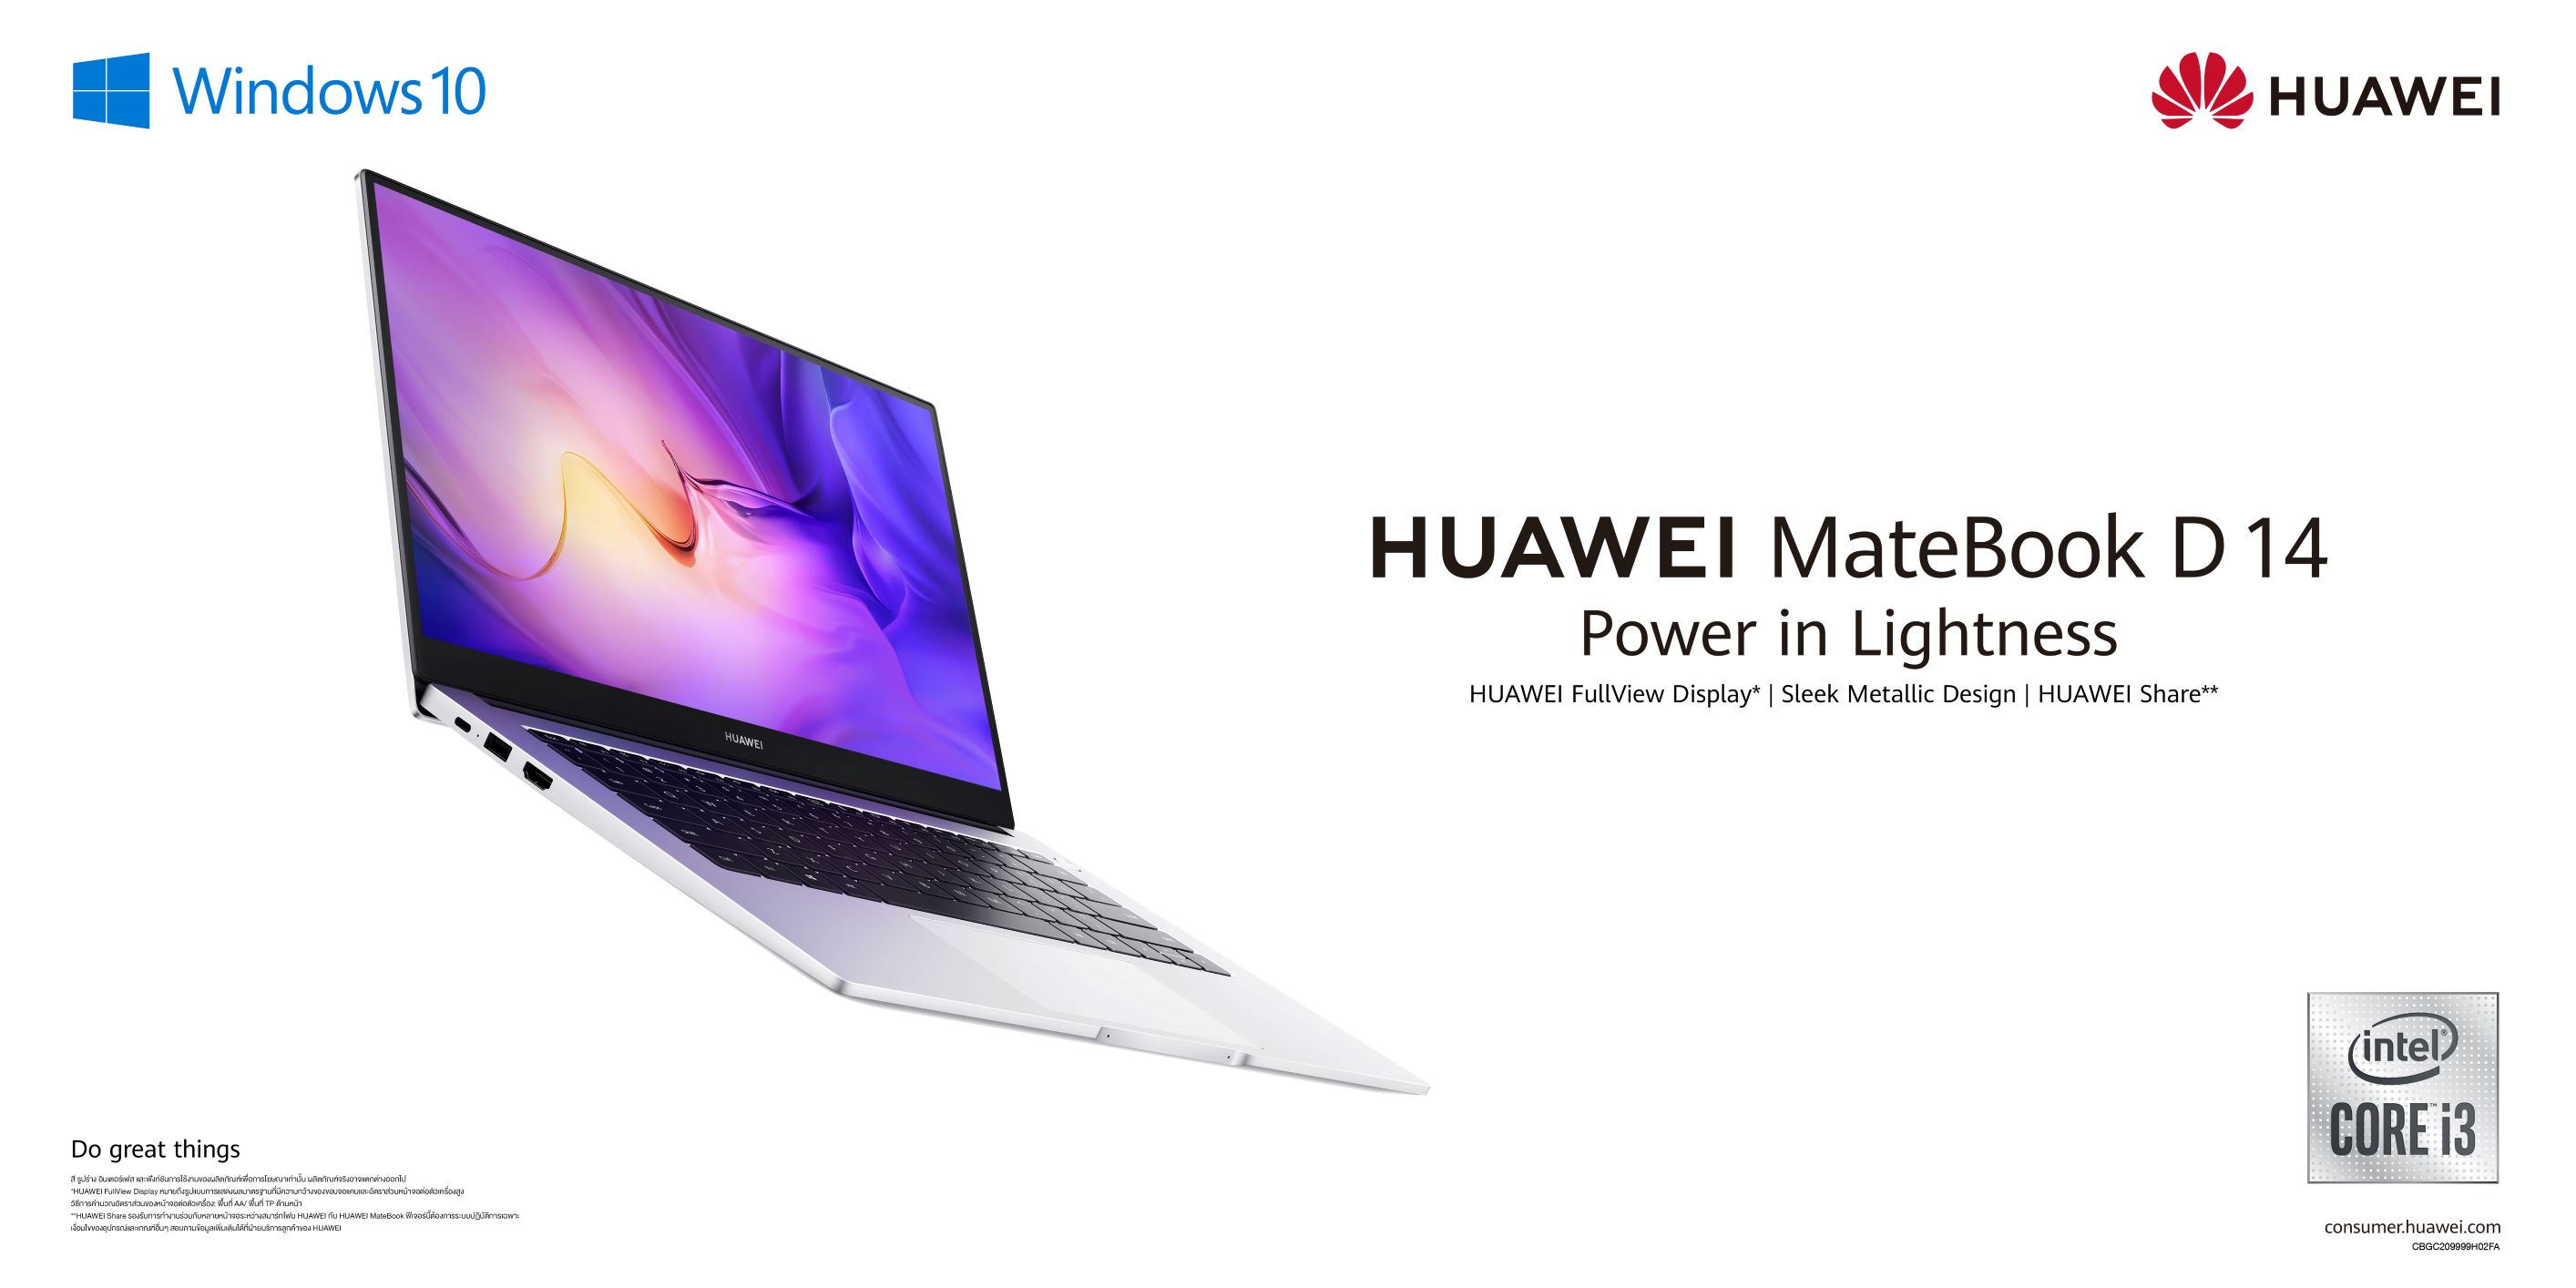 Huawei พร้อมเสิร์ฟโปรโมชันสุดคุ้ม HUAWEI MateBook D 14 เตรียมตั้งรับช่วงปั่นงานและสอบปลายปี!